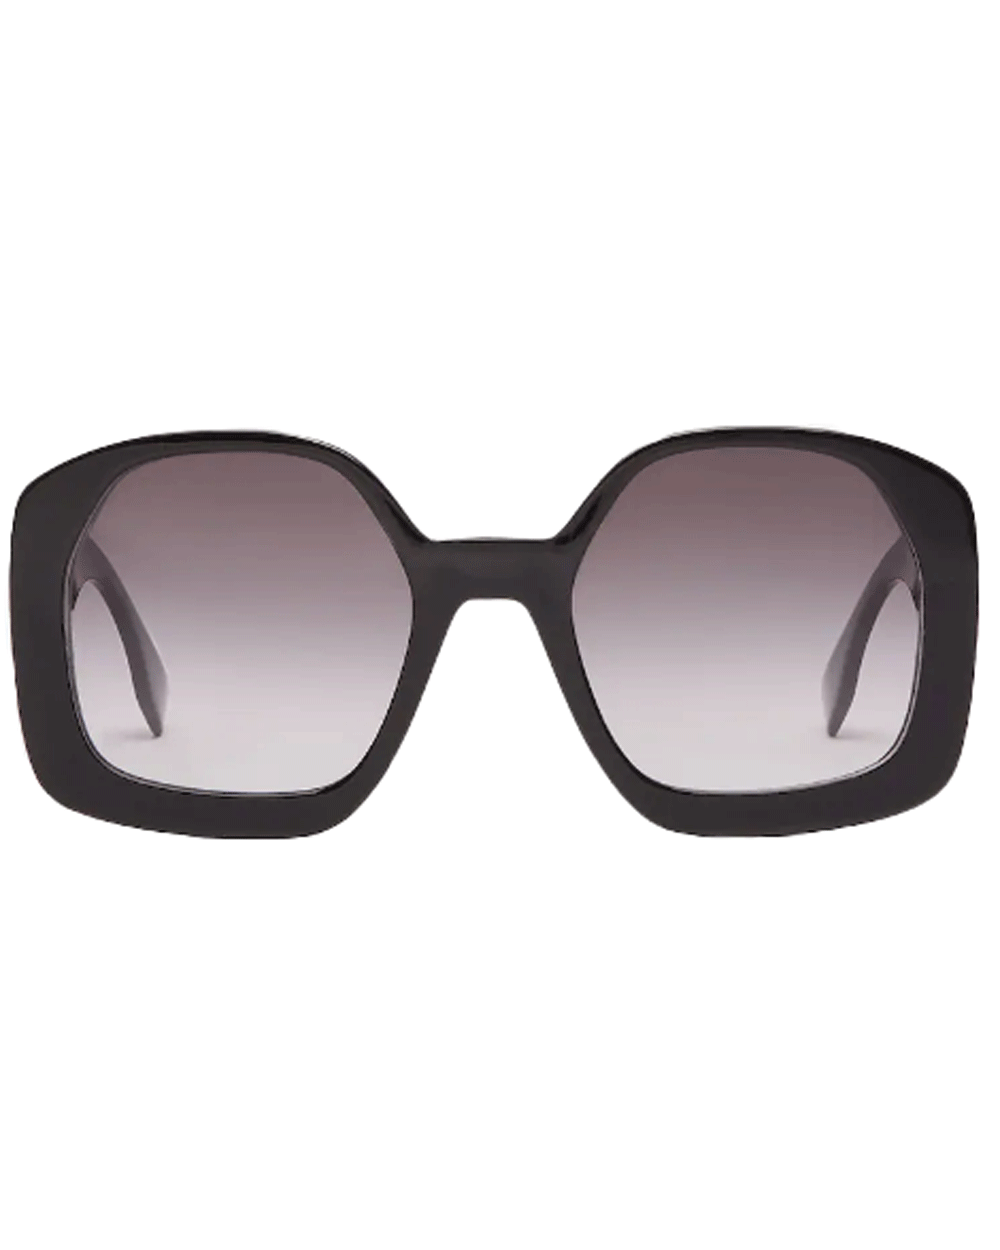 O'Lock - Black acetate sunglasses